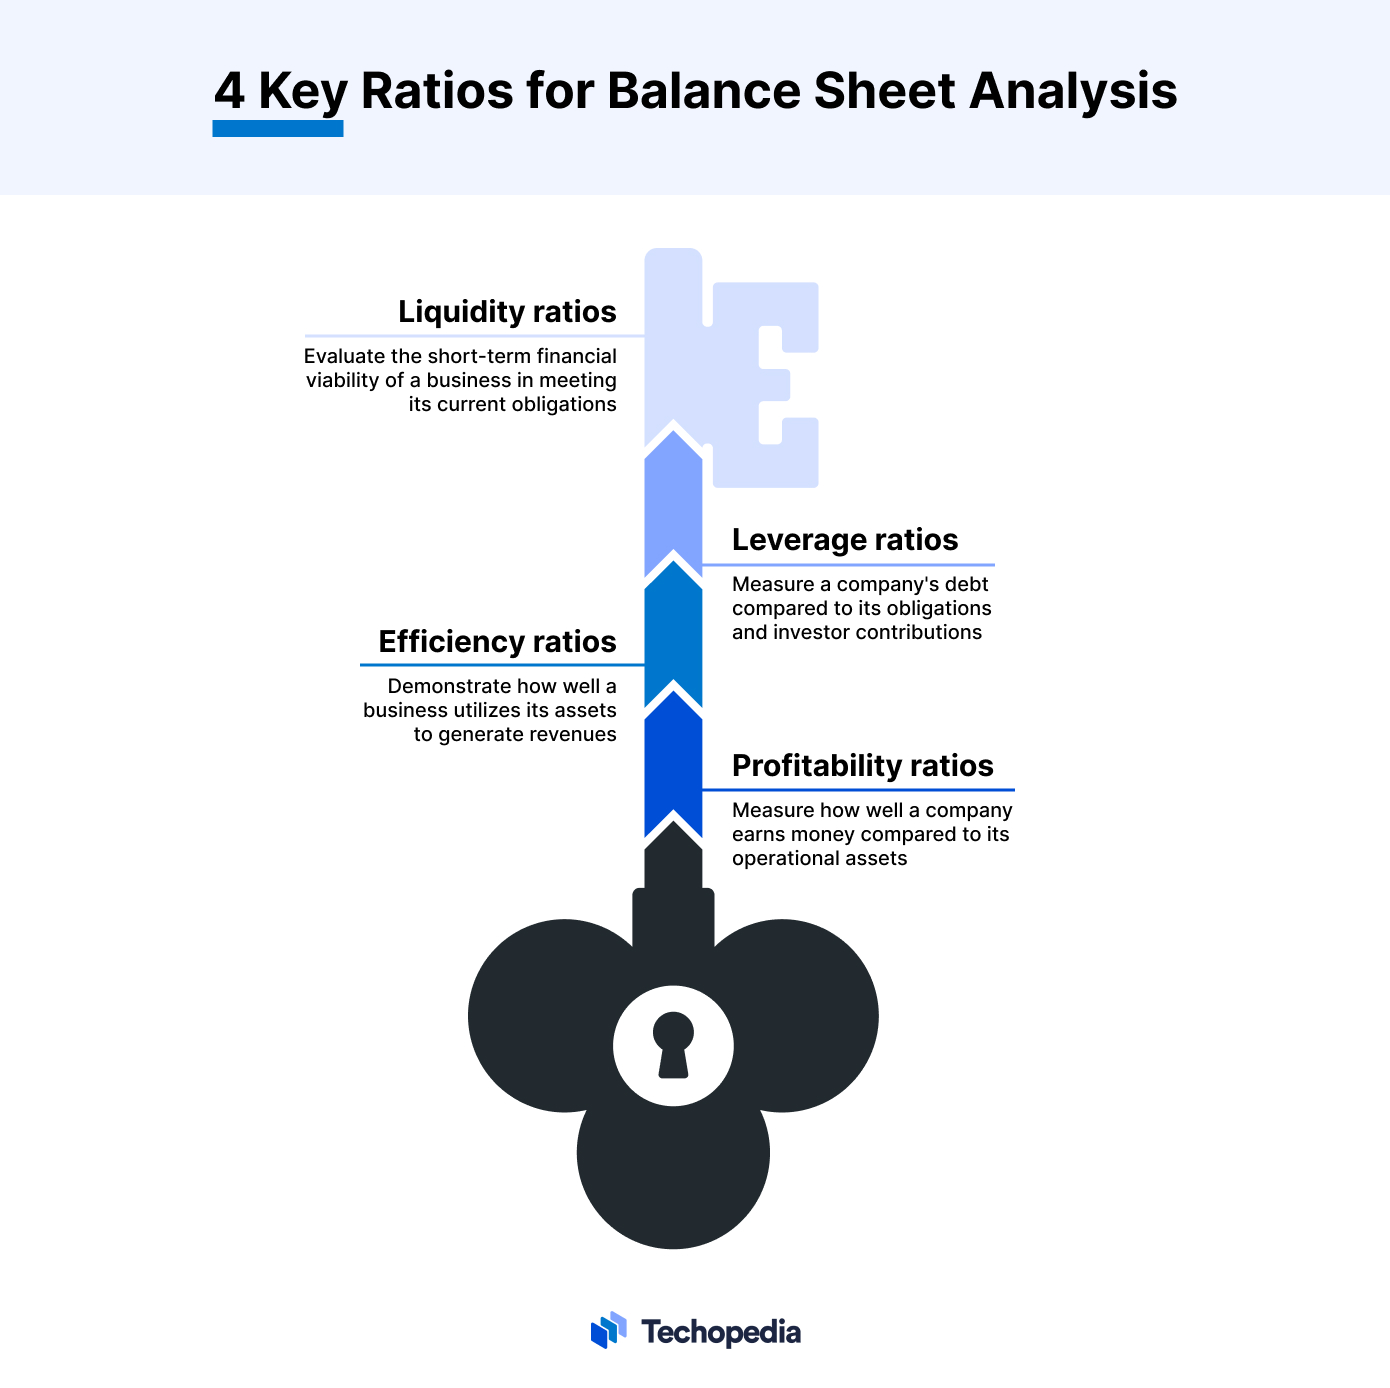 4 Key Ratios for Balance Sheet Analysis